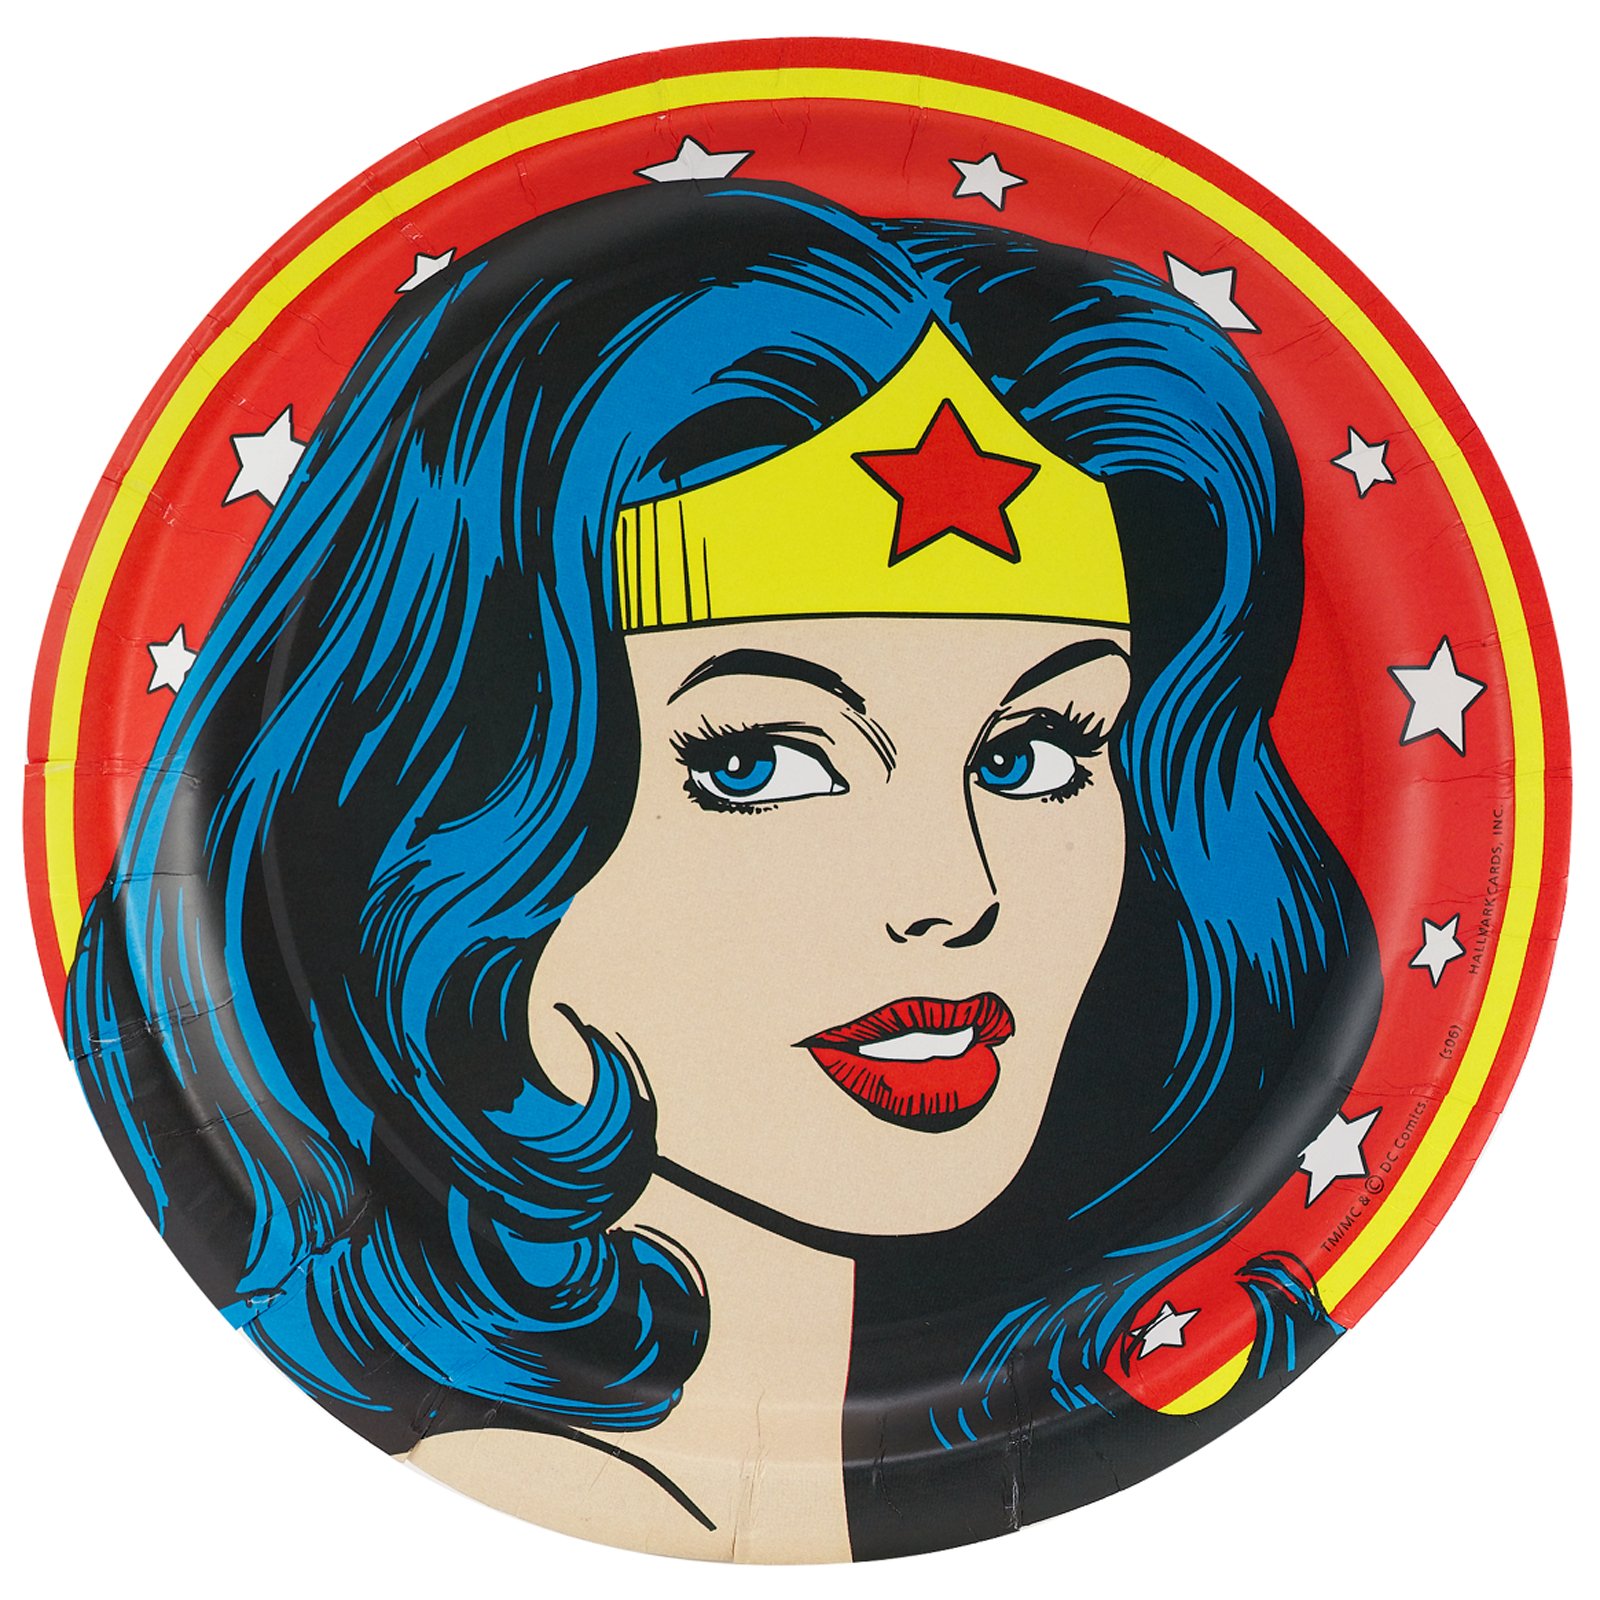 Wonder Woman Cartoon Wallpapers